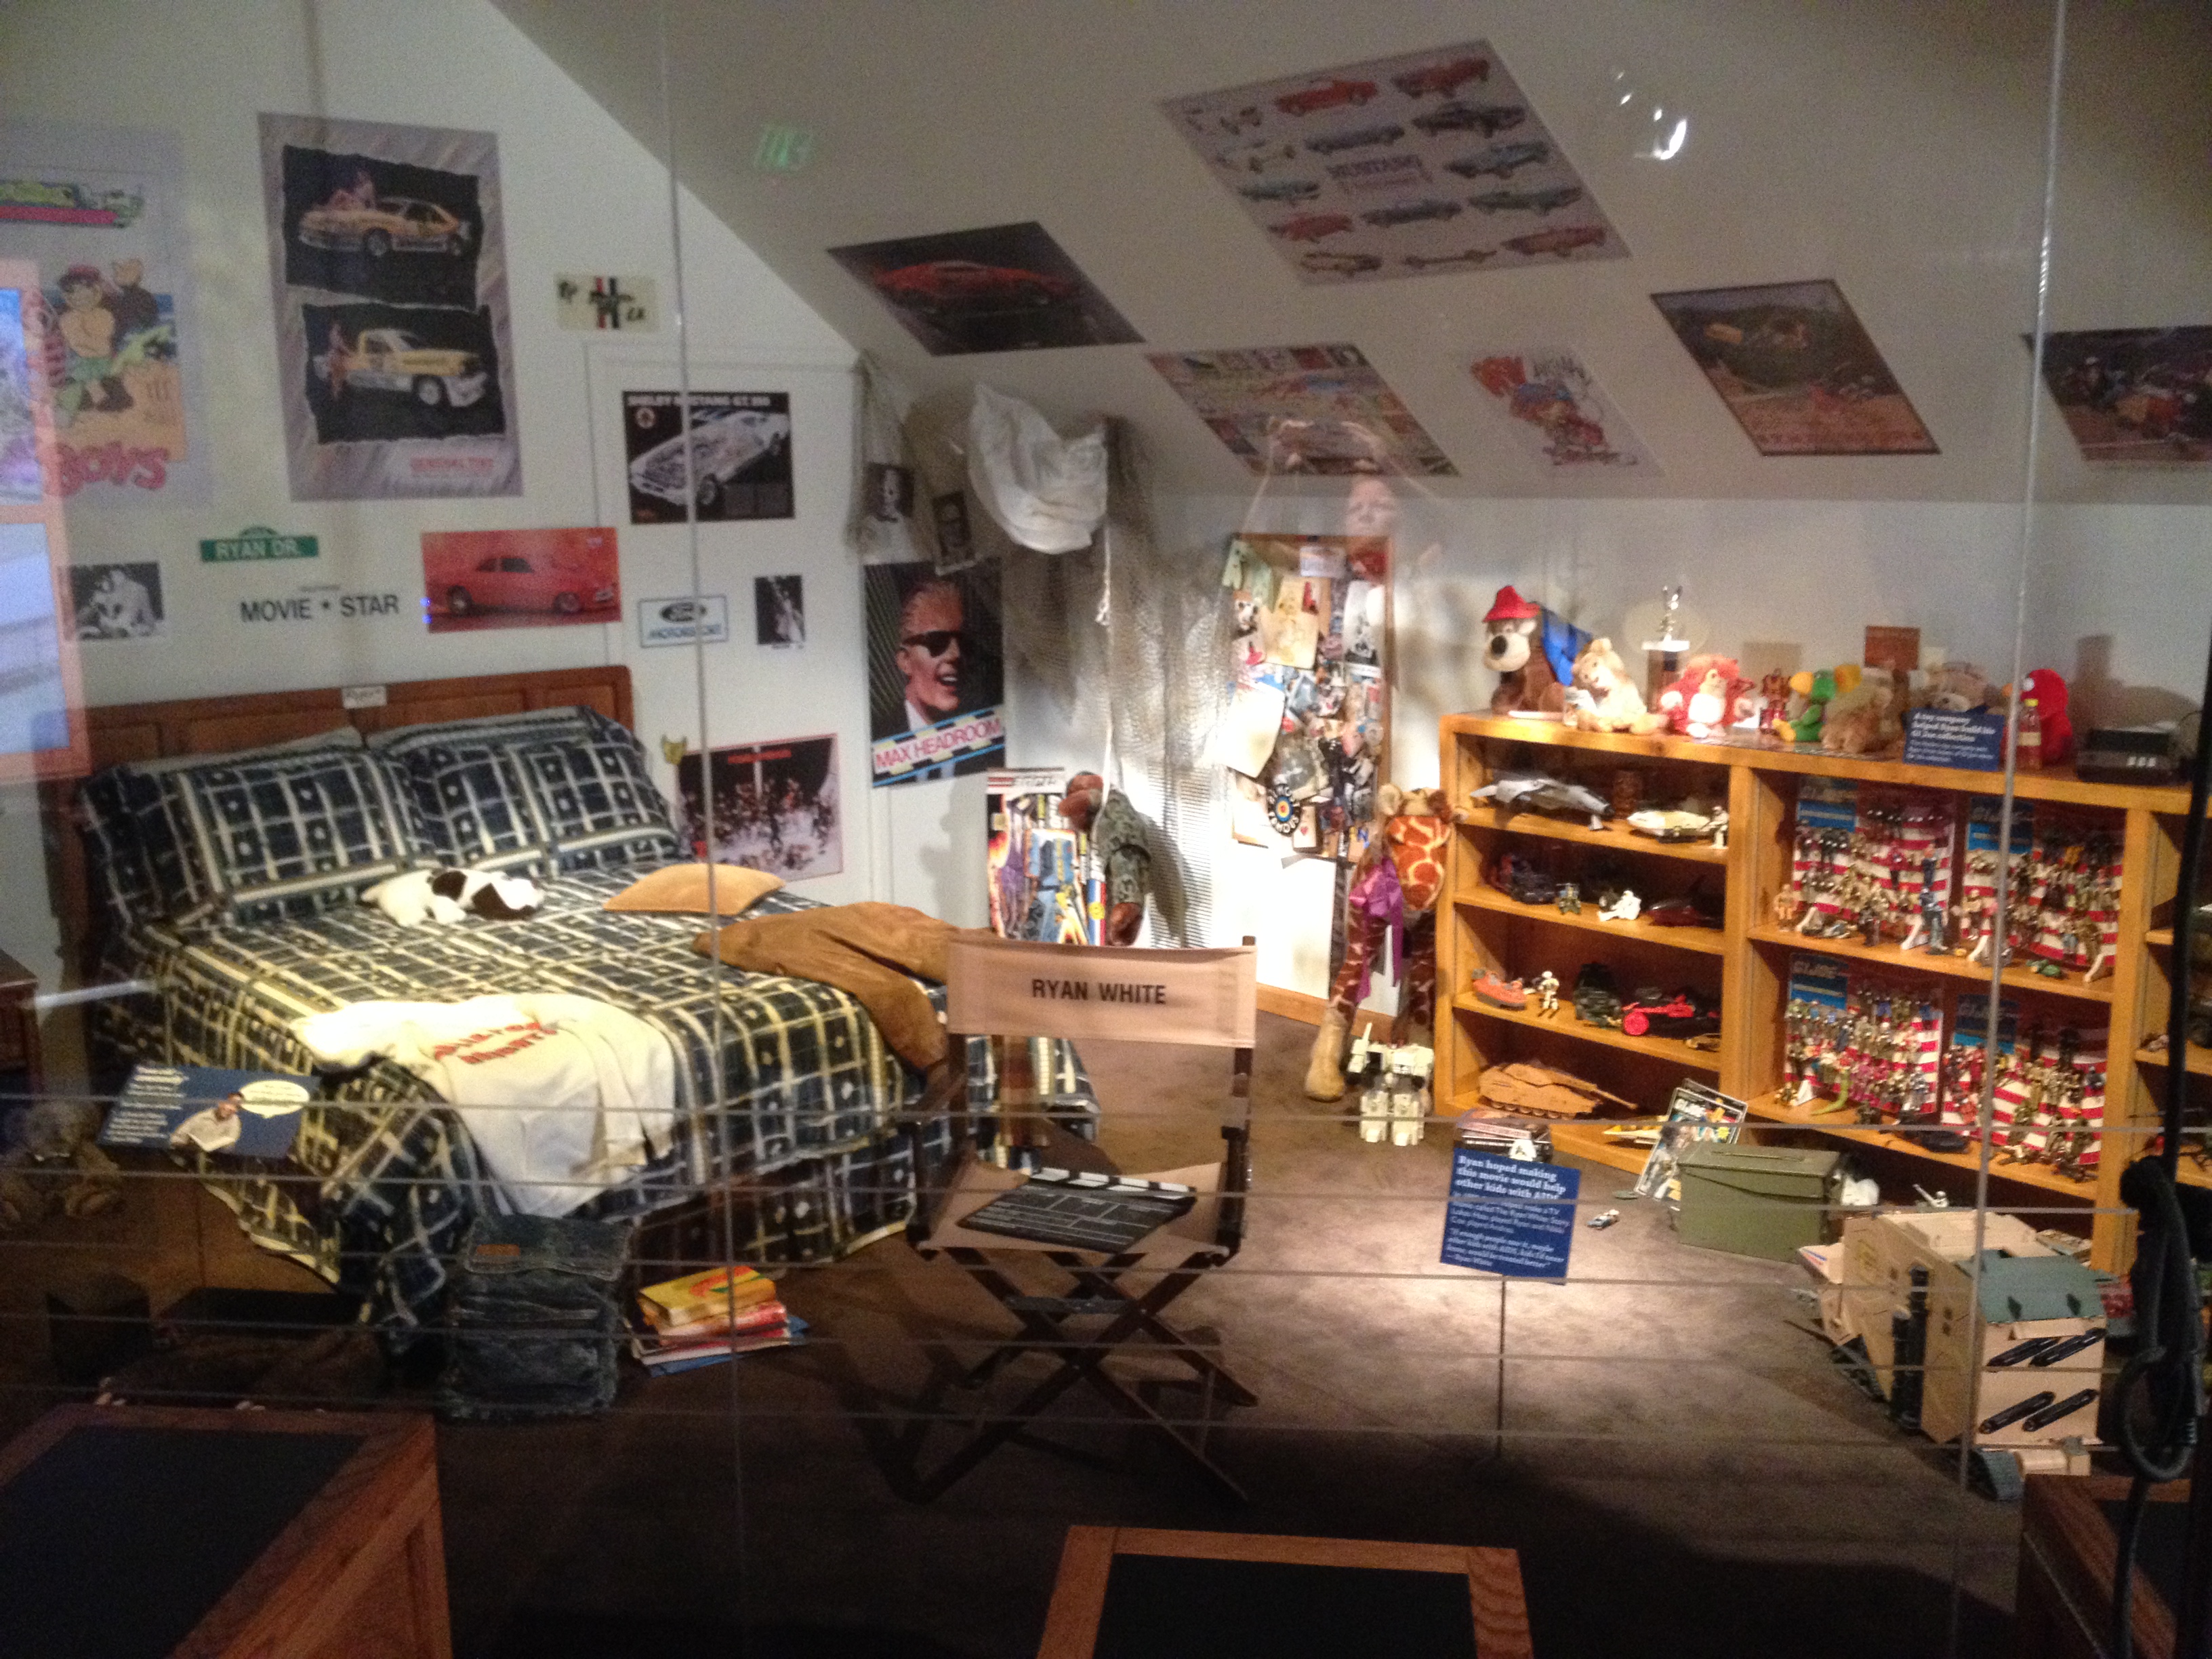 Ryan White's room